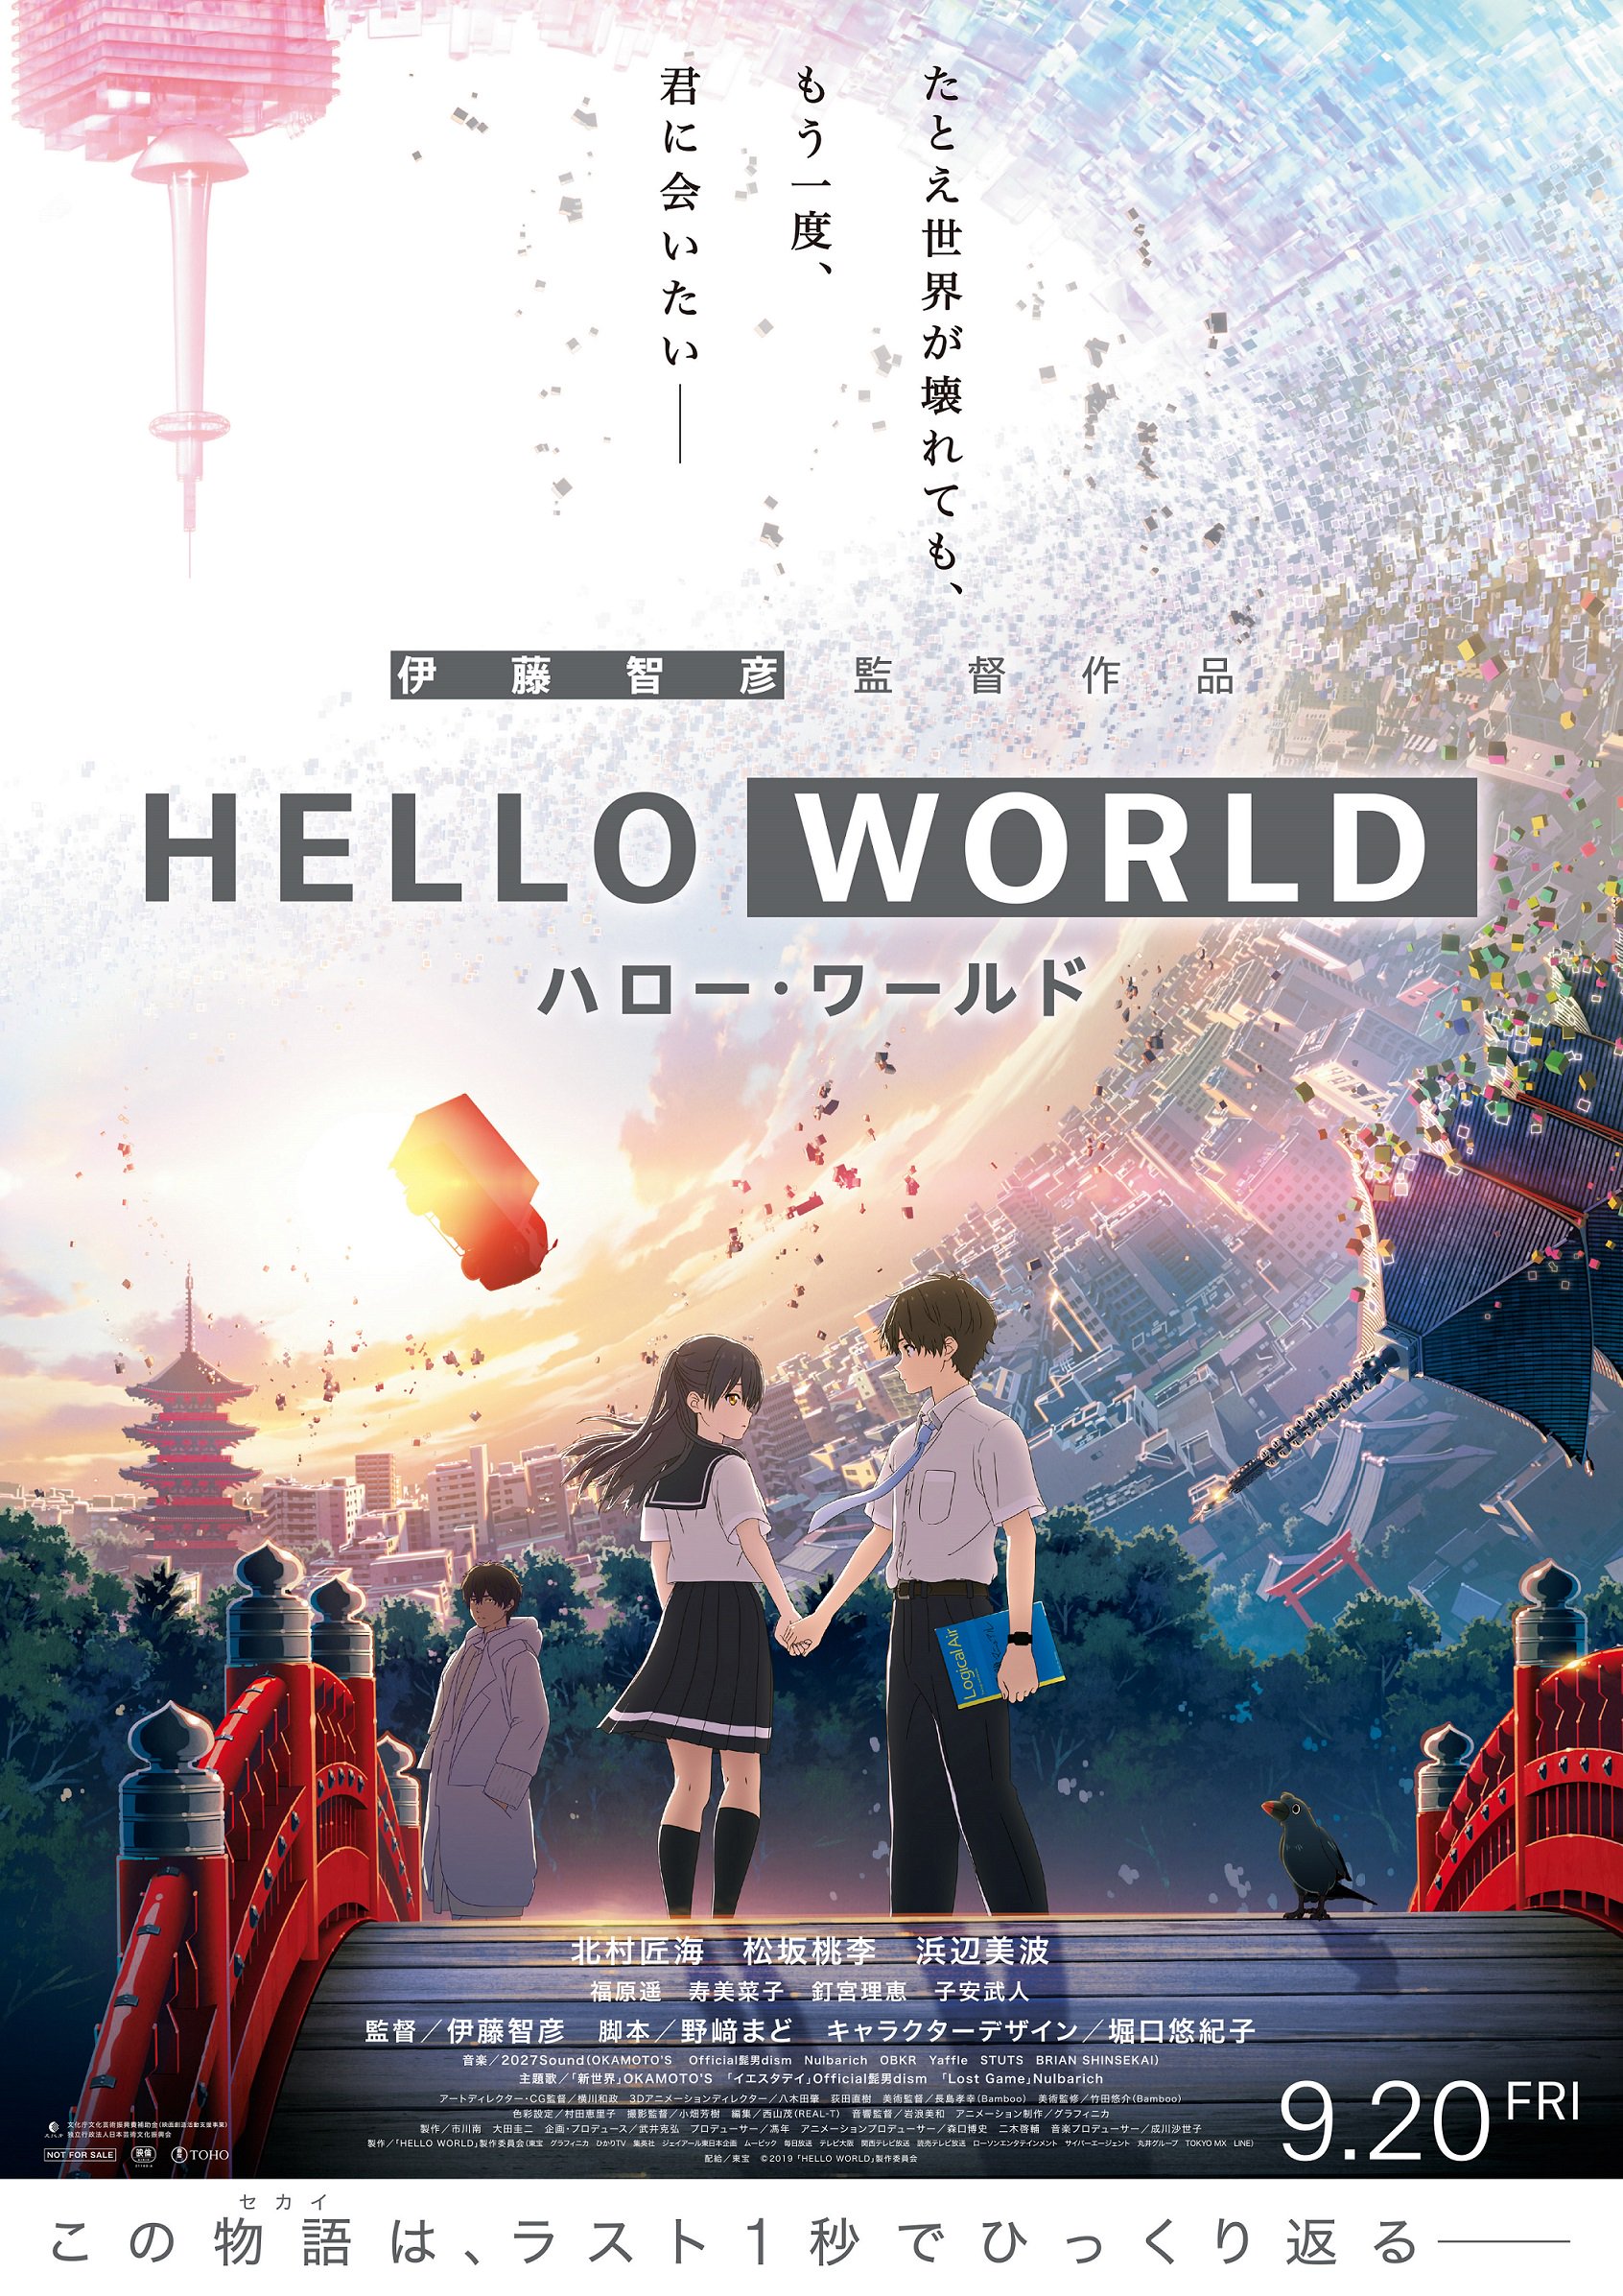 Hello World Poster Visual.jpg